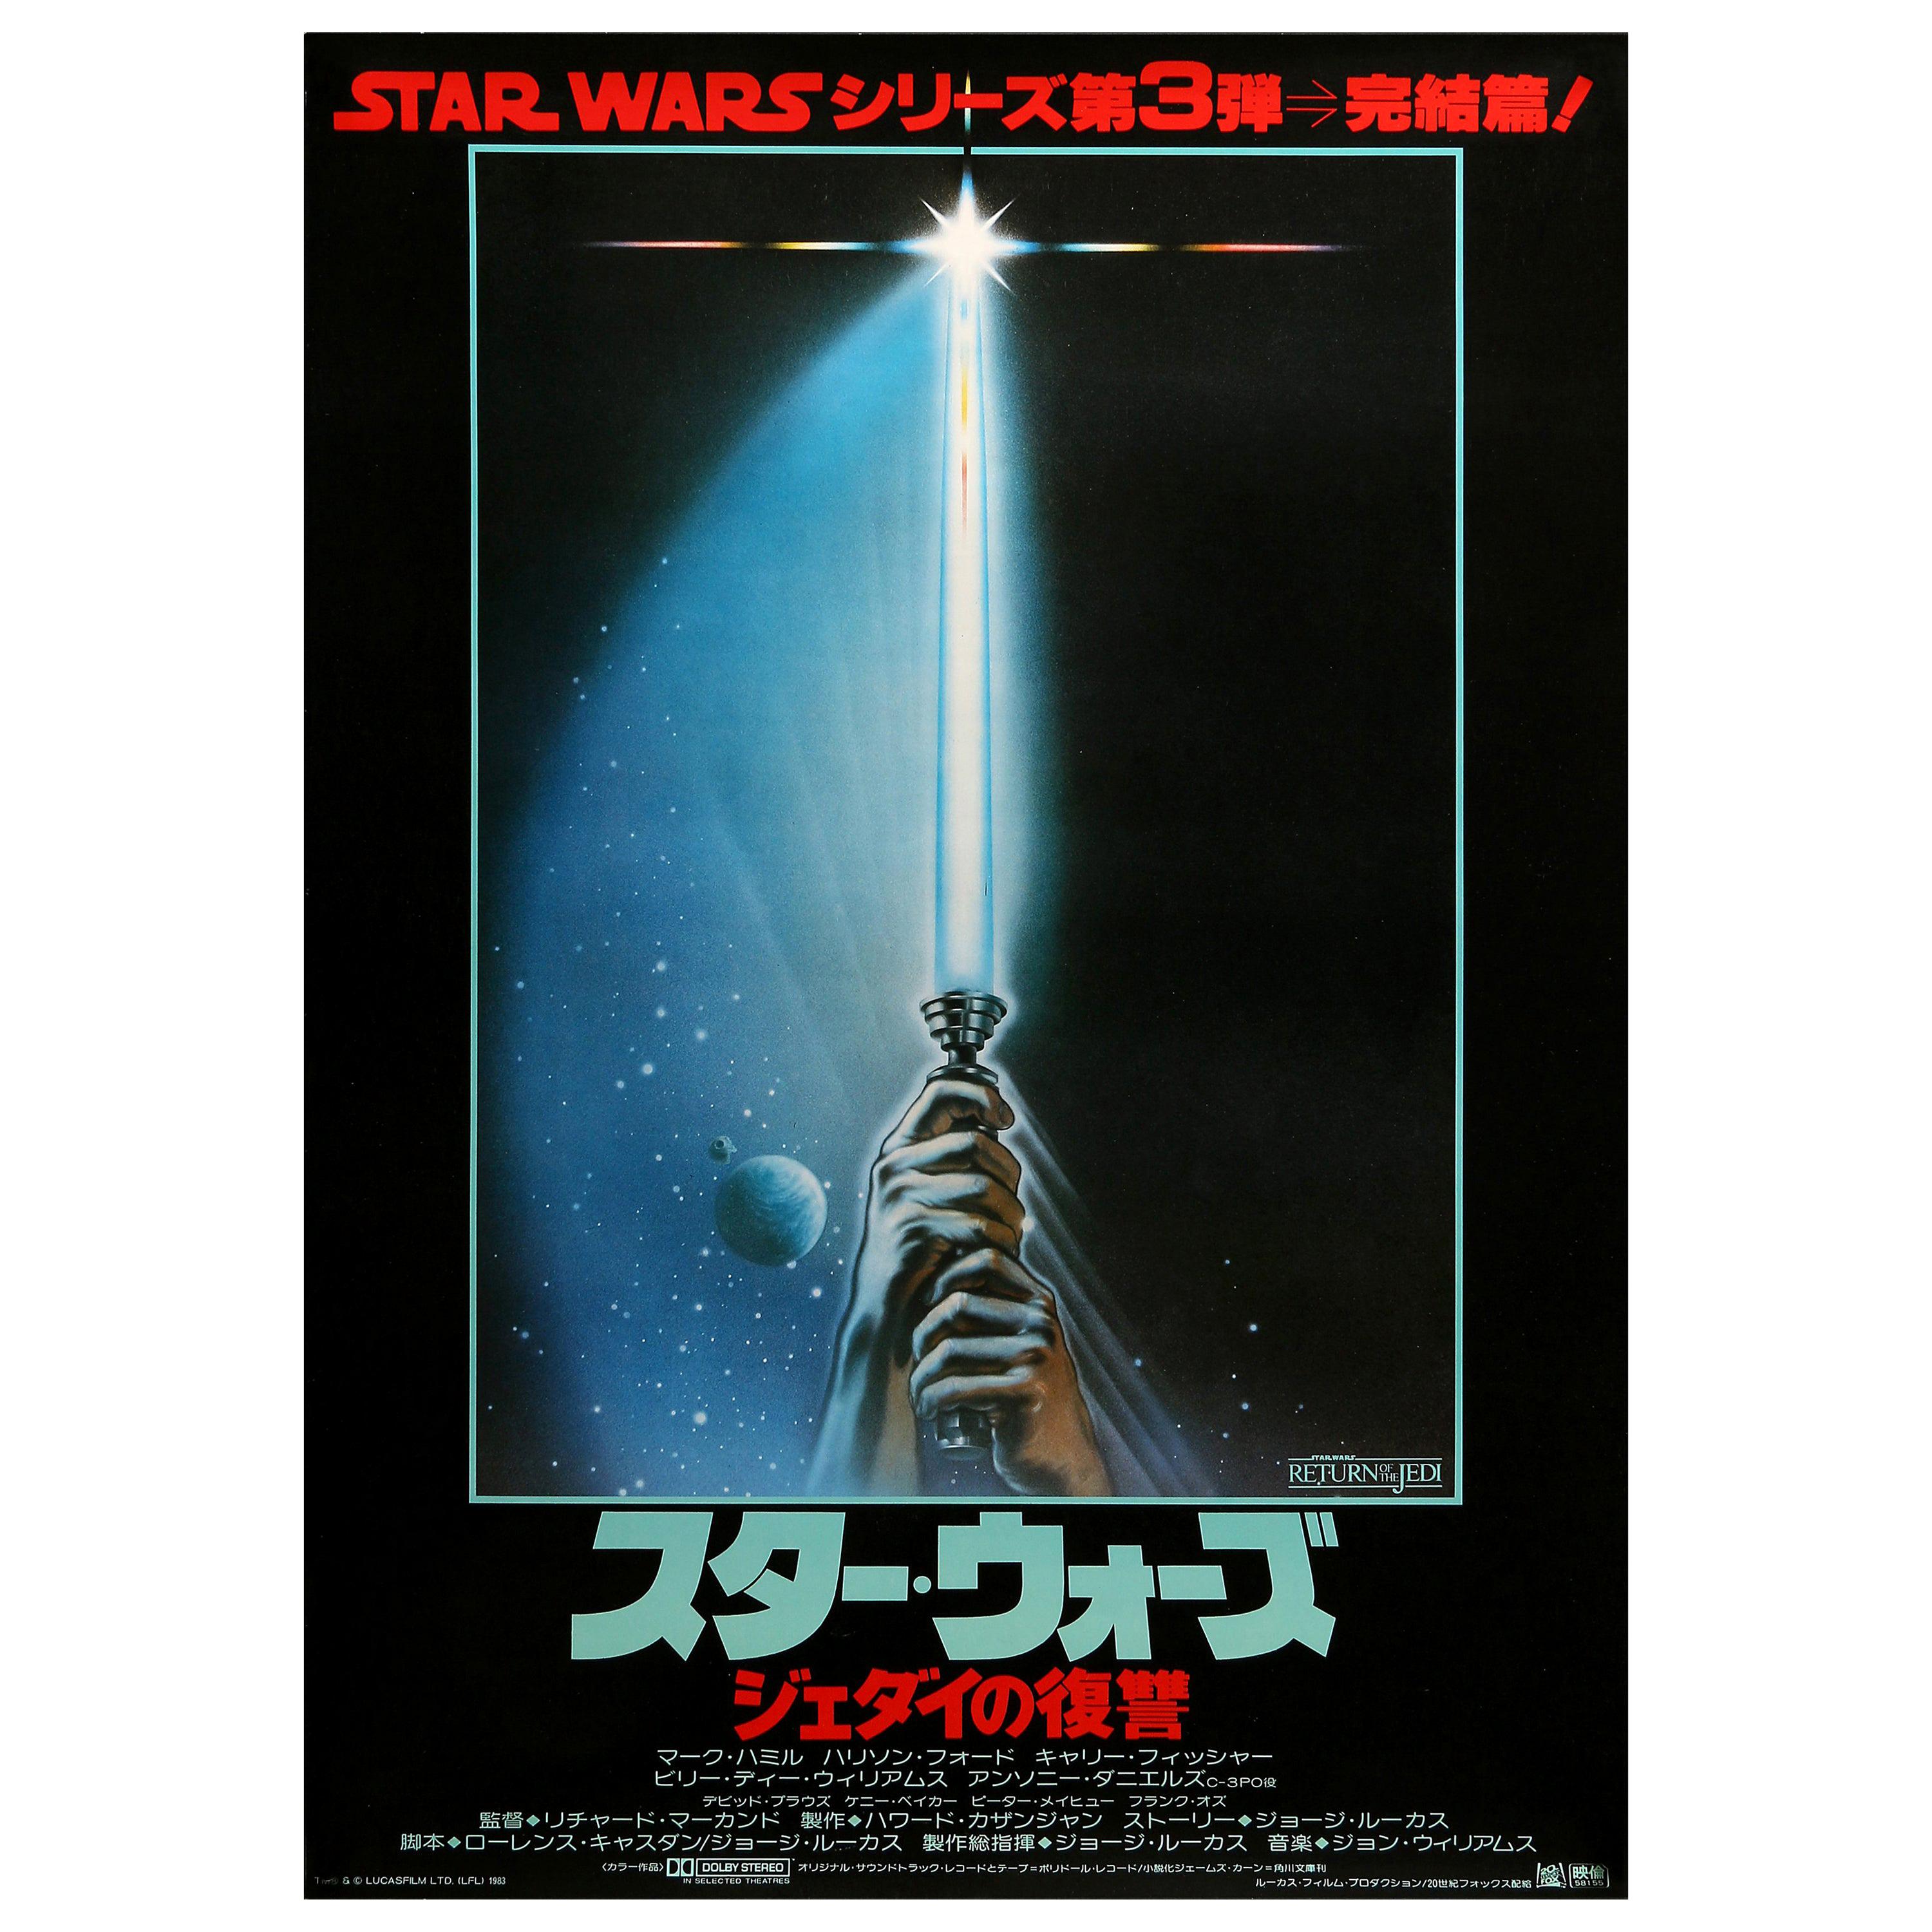 Star Wars 'Return of the Jedi' Original Vintage Movie Poster, Japanese, 1983